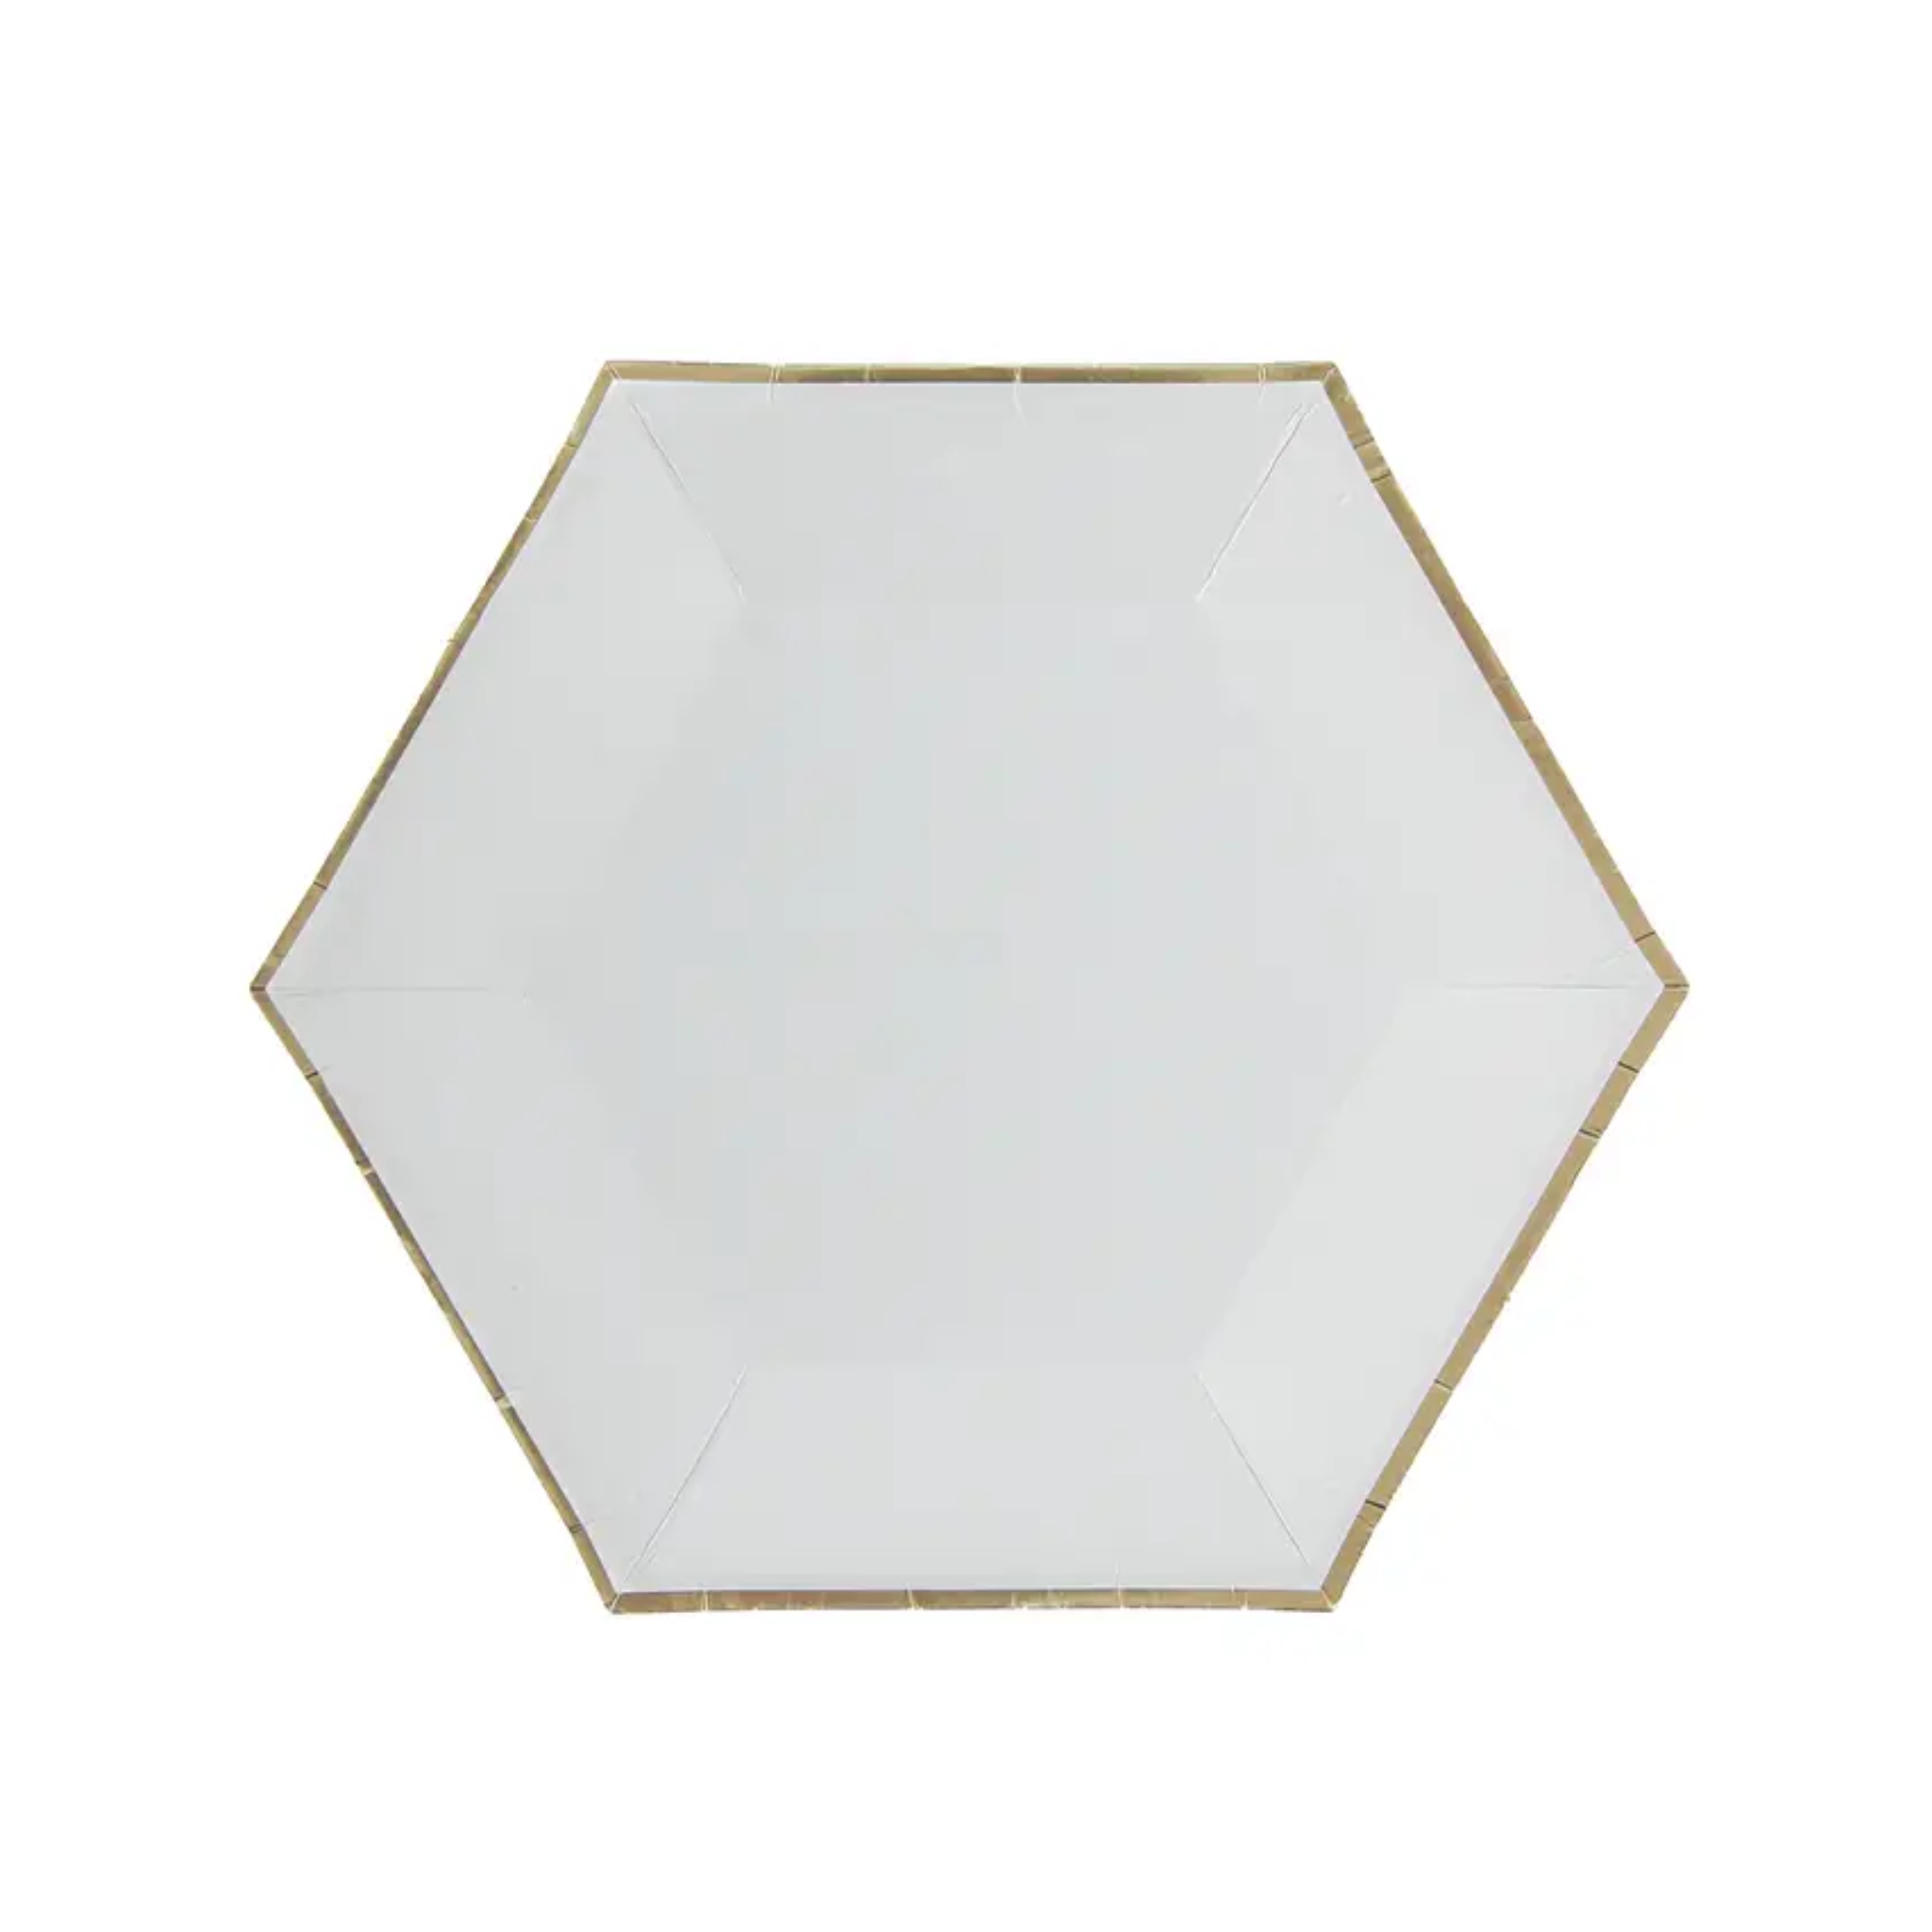 Bronzing White Hexagon 7 Inch Paper Plates Set